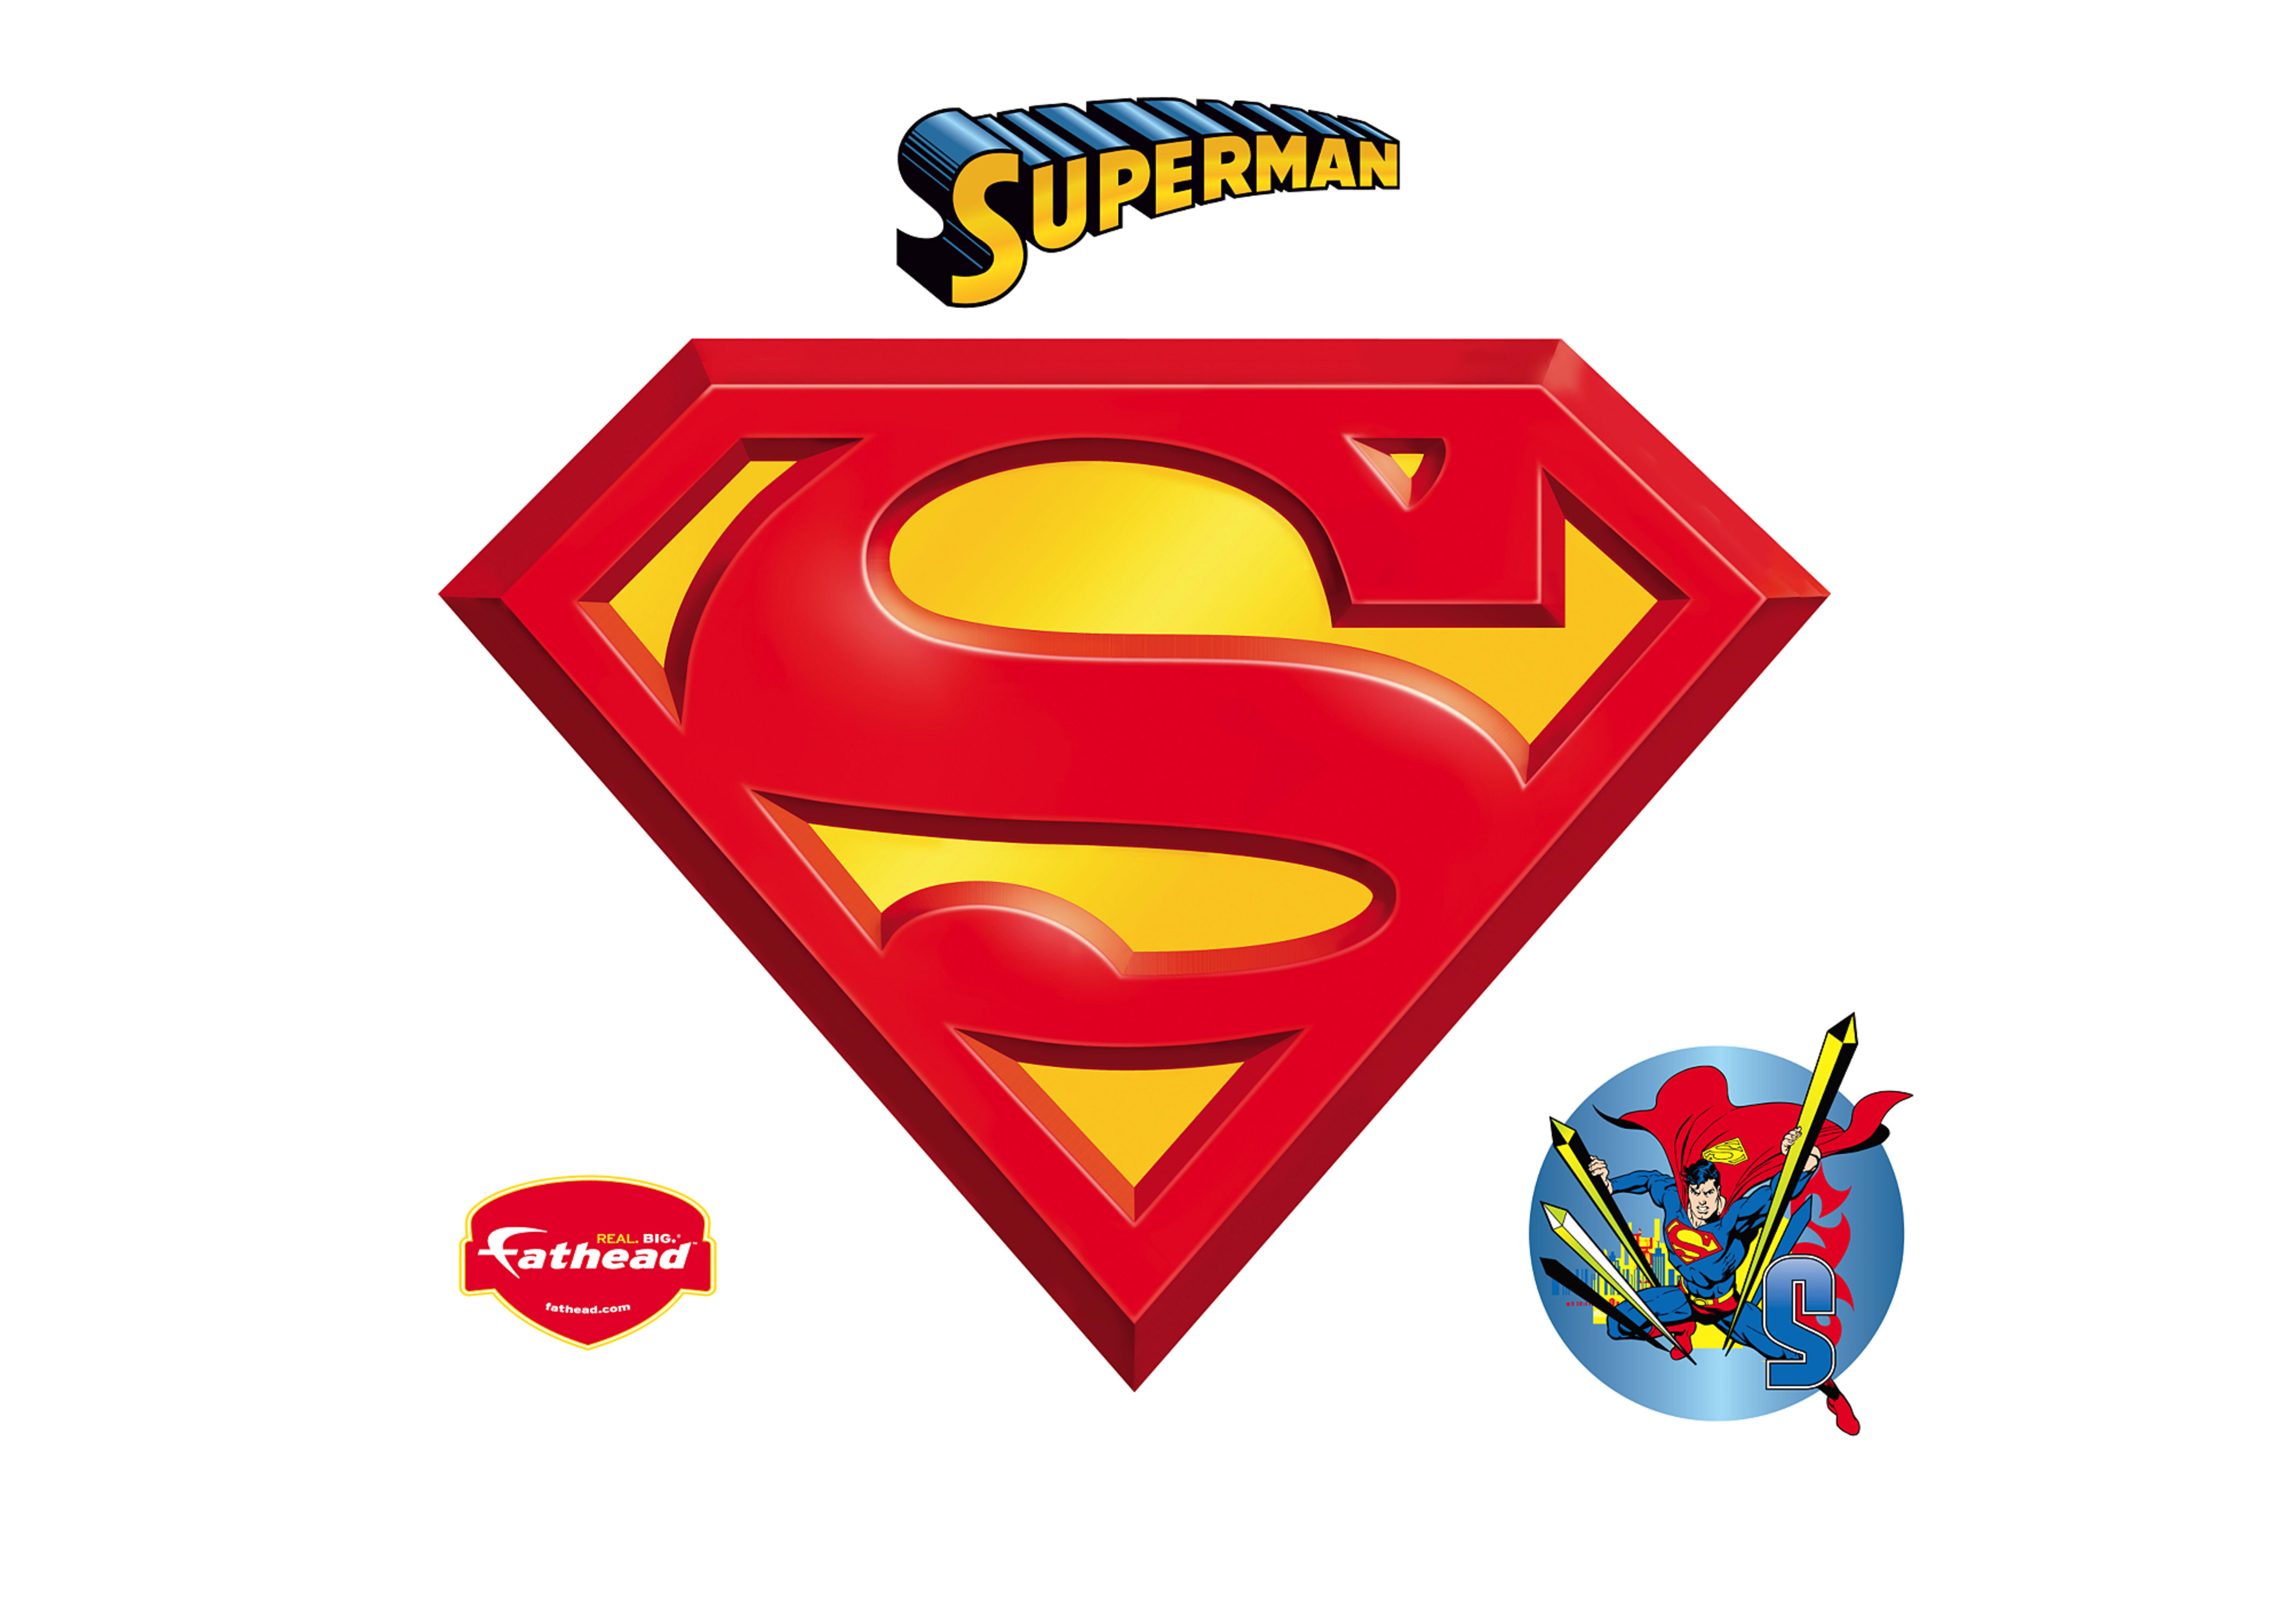 Superman logo wall decal shop fathead for decor jpg